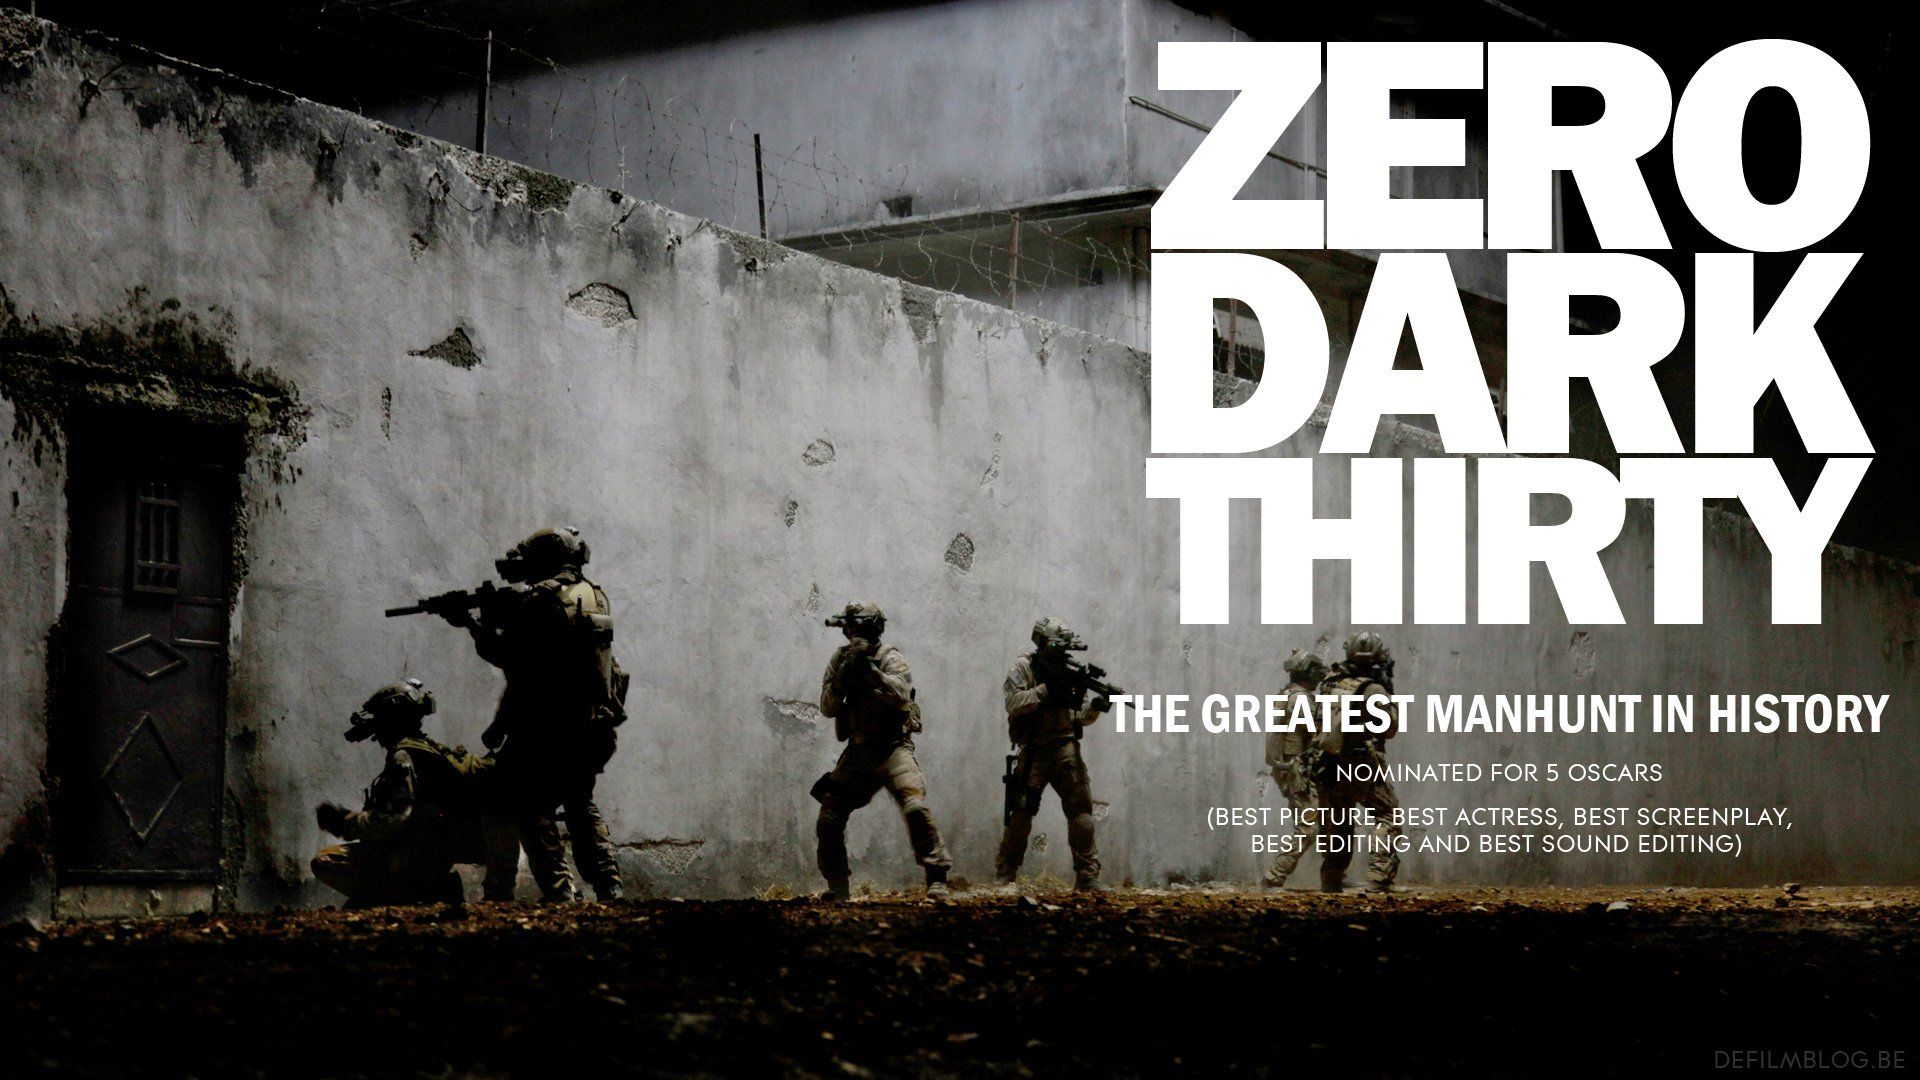 ZERO DARK THIRTY drama history military thriller poster wallpaperx1080